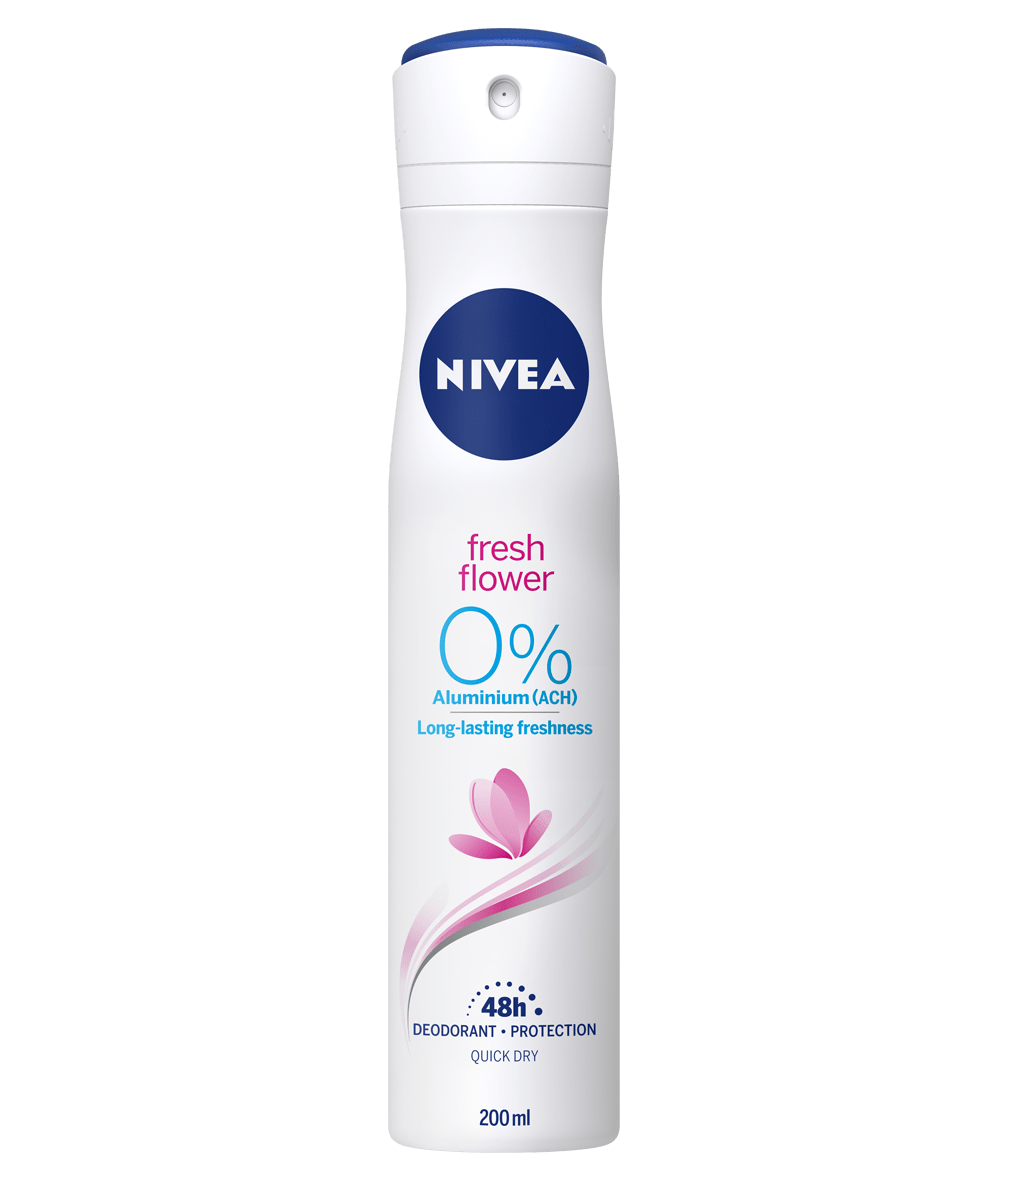 nivea fresh flower 0% aluminium 48h deodorant spray